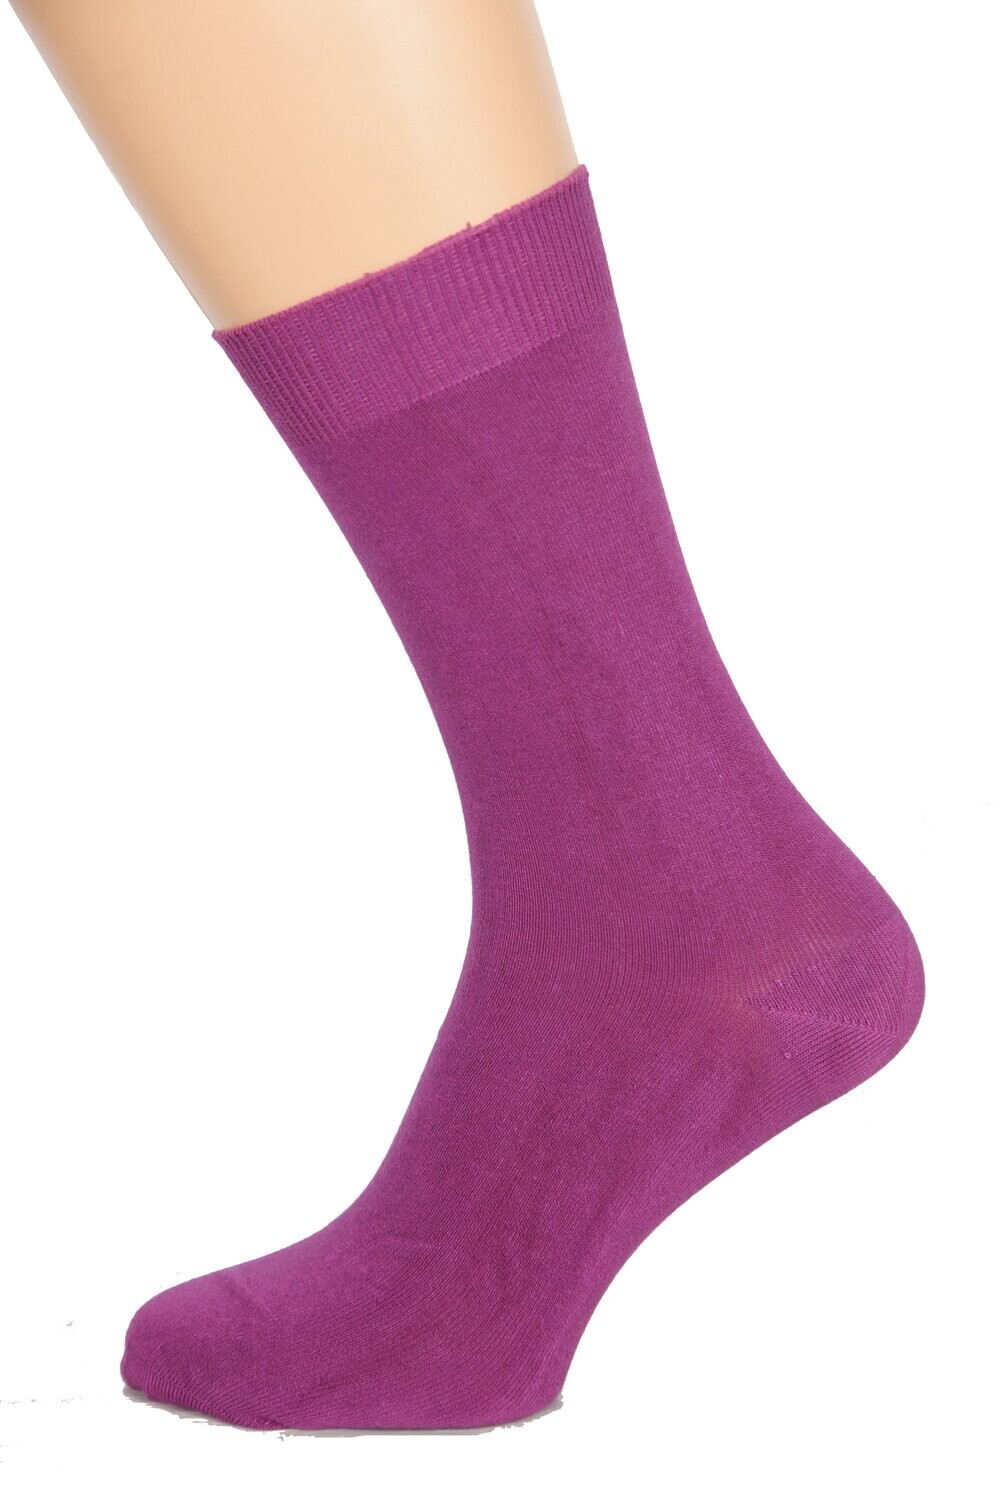 TAUNO men's purple socks